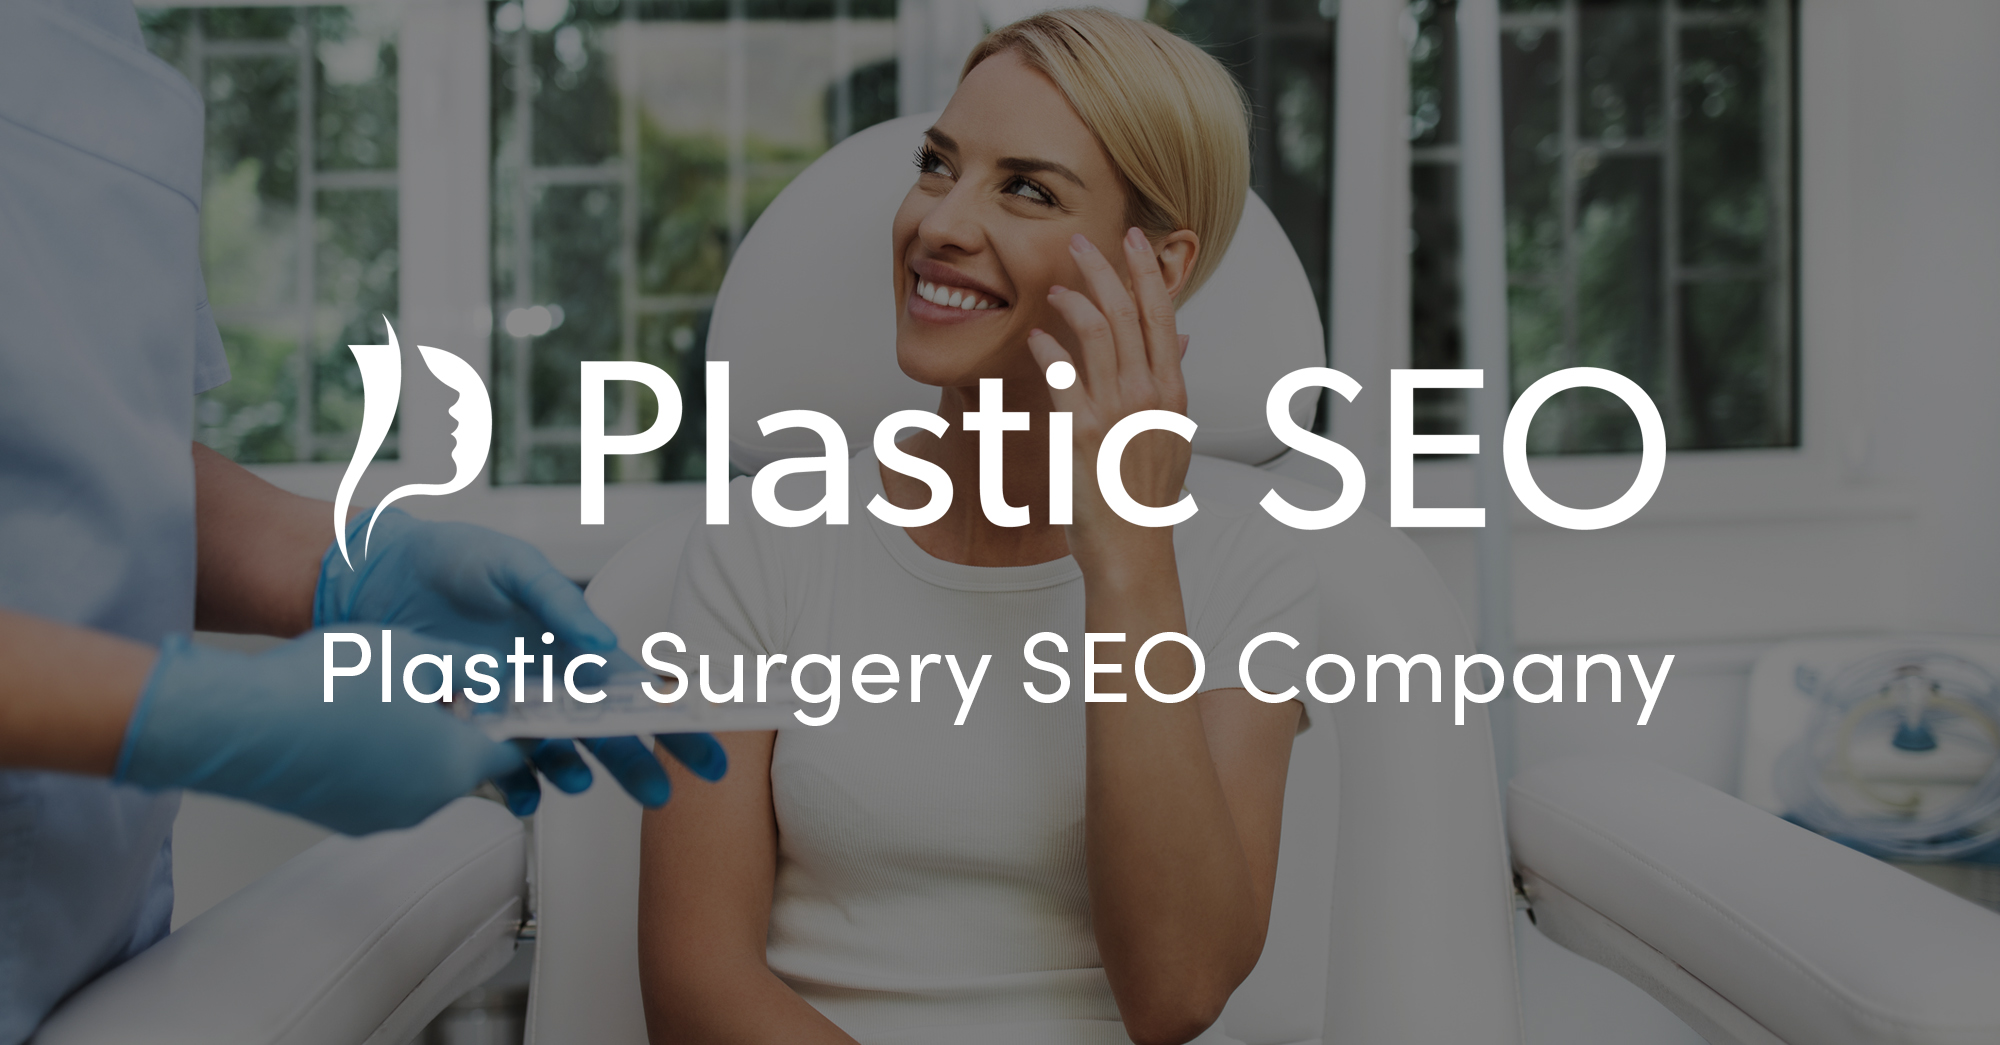 Plastic Surgery SEO Company - Plastic SEO